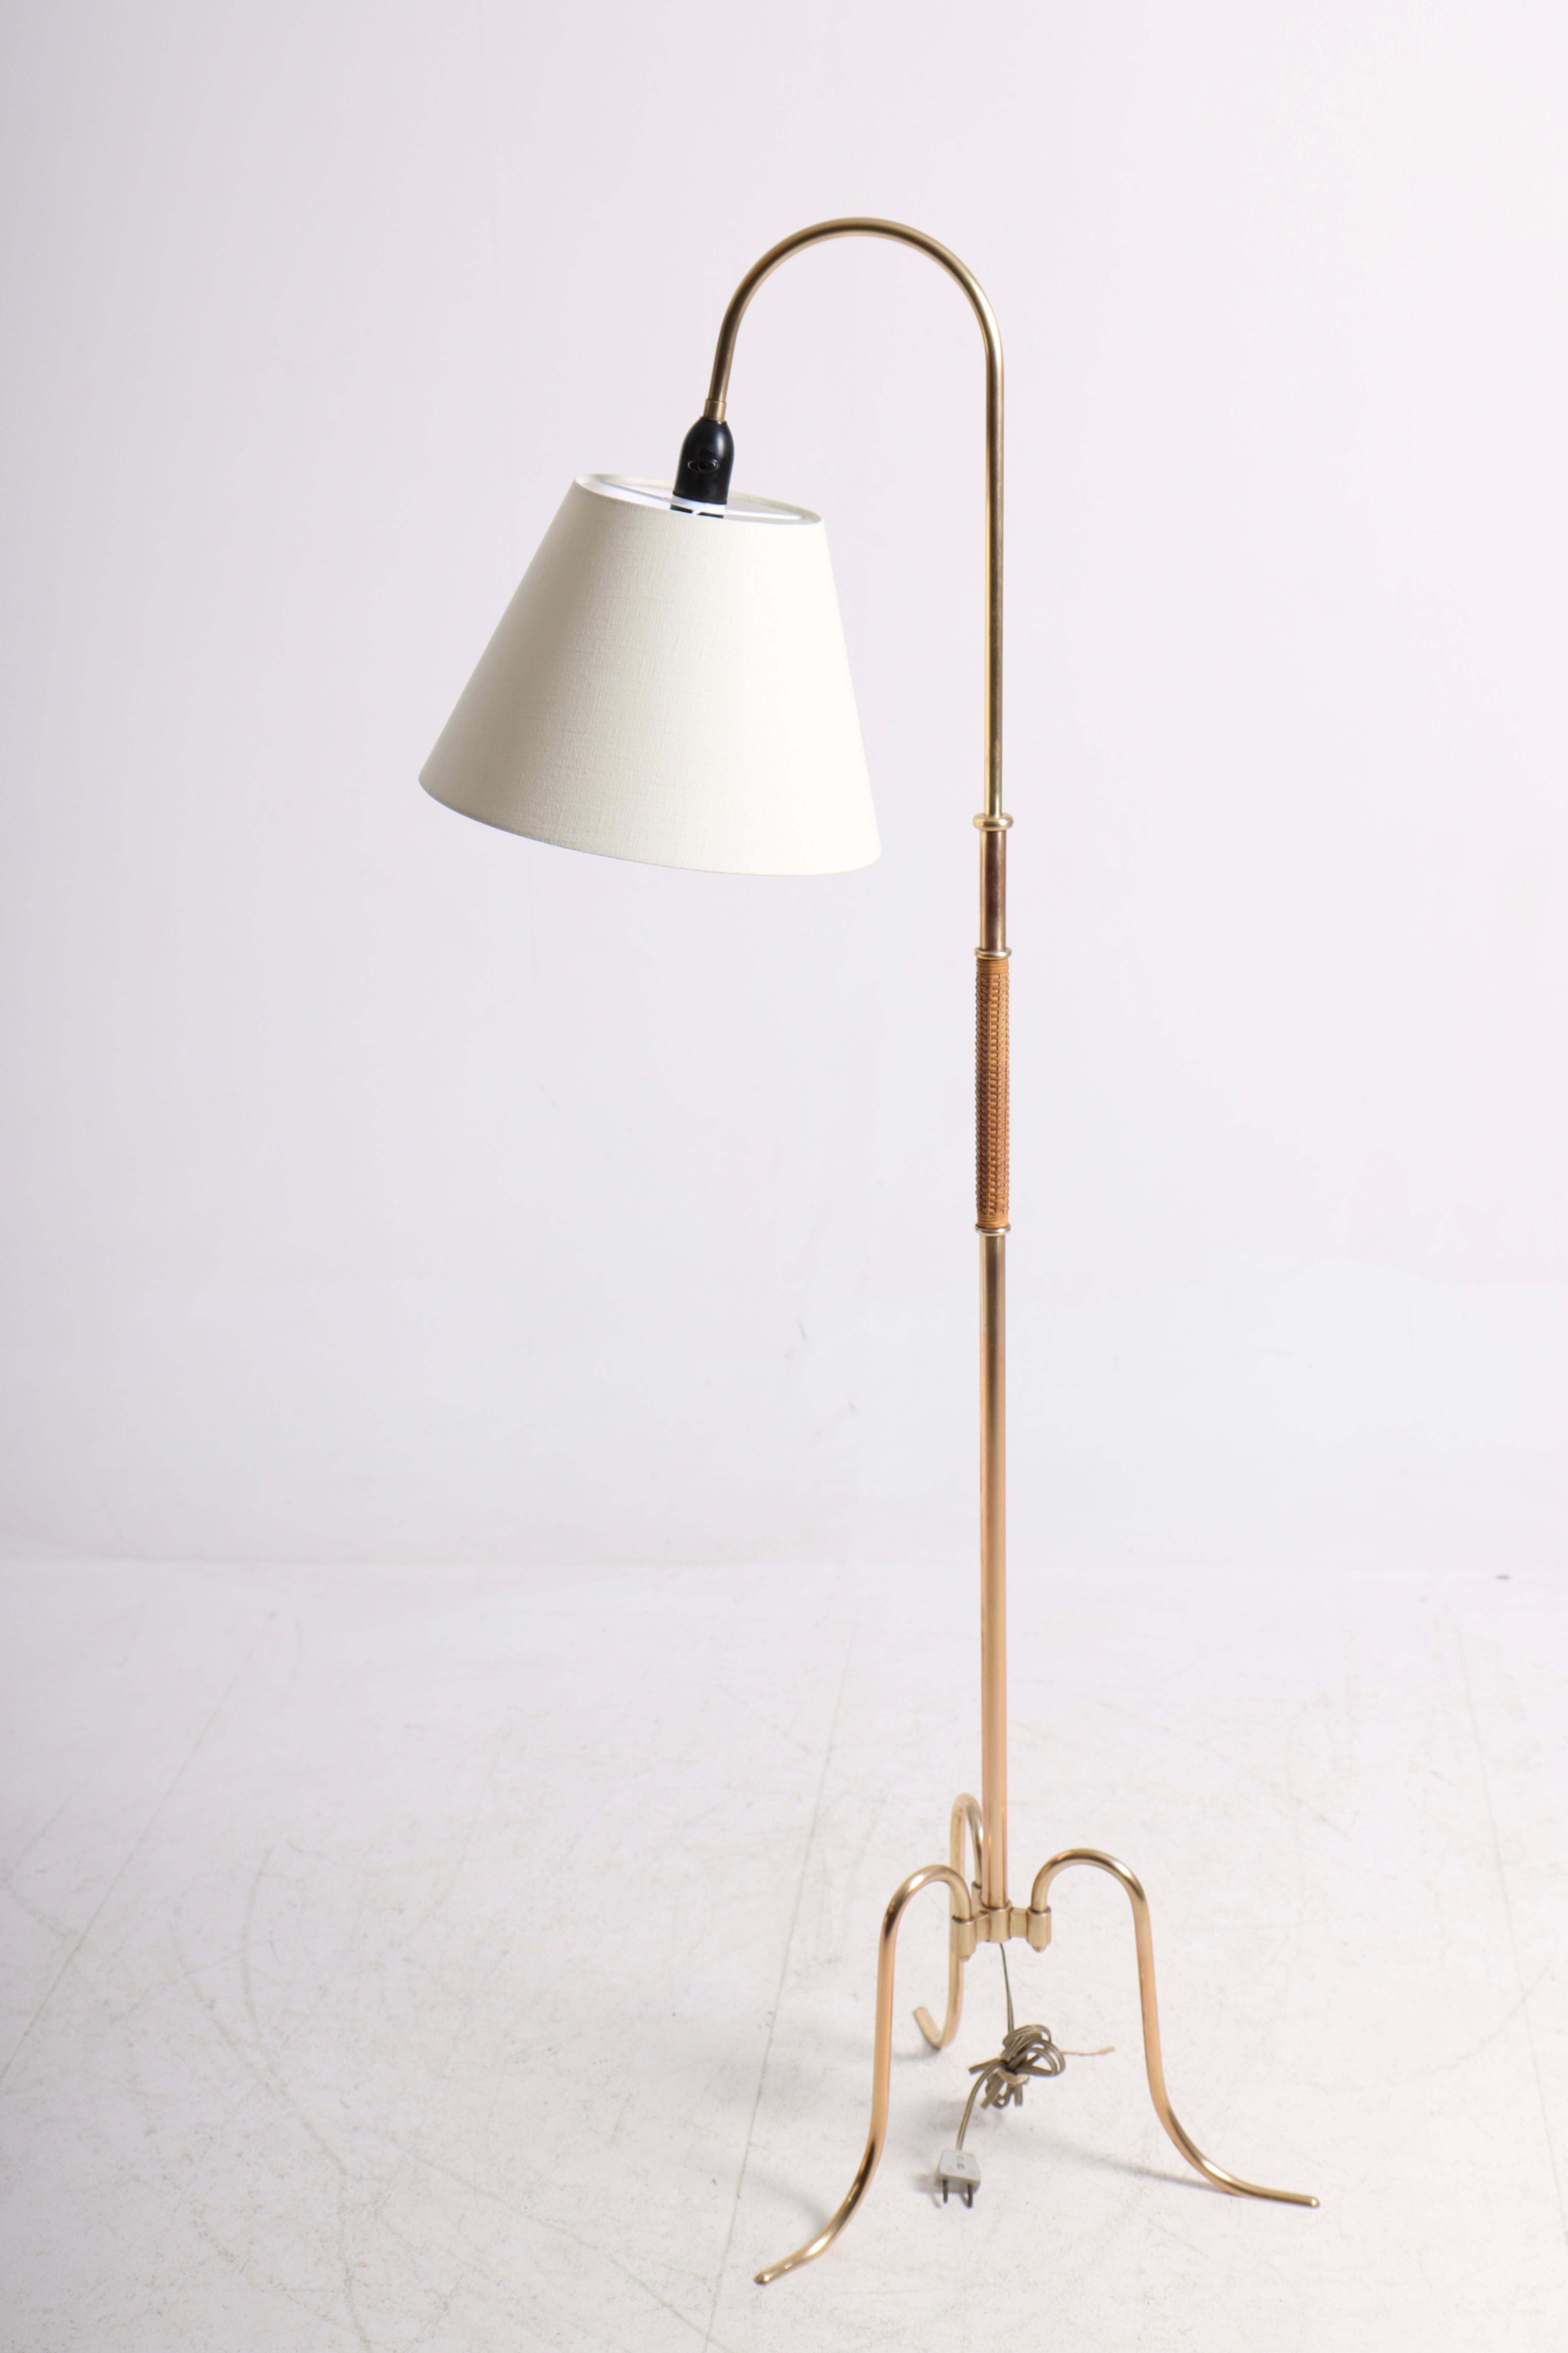 Danish floor light in brass. Designed and made for Lysberg Hansen & Terp in the 1940s-1950s. Original condition.